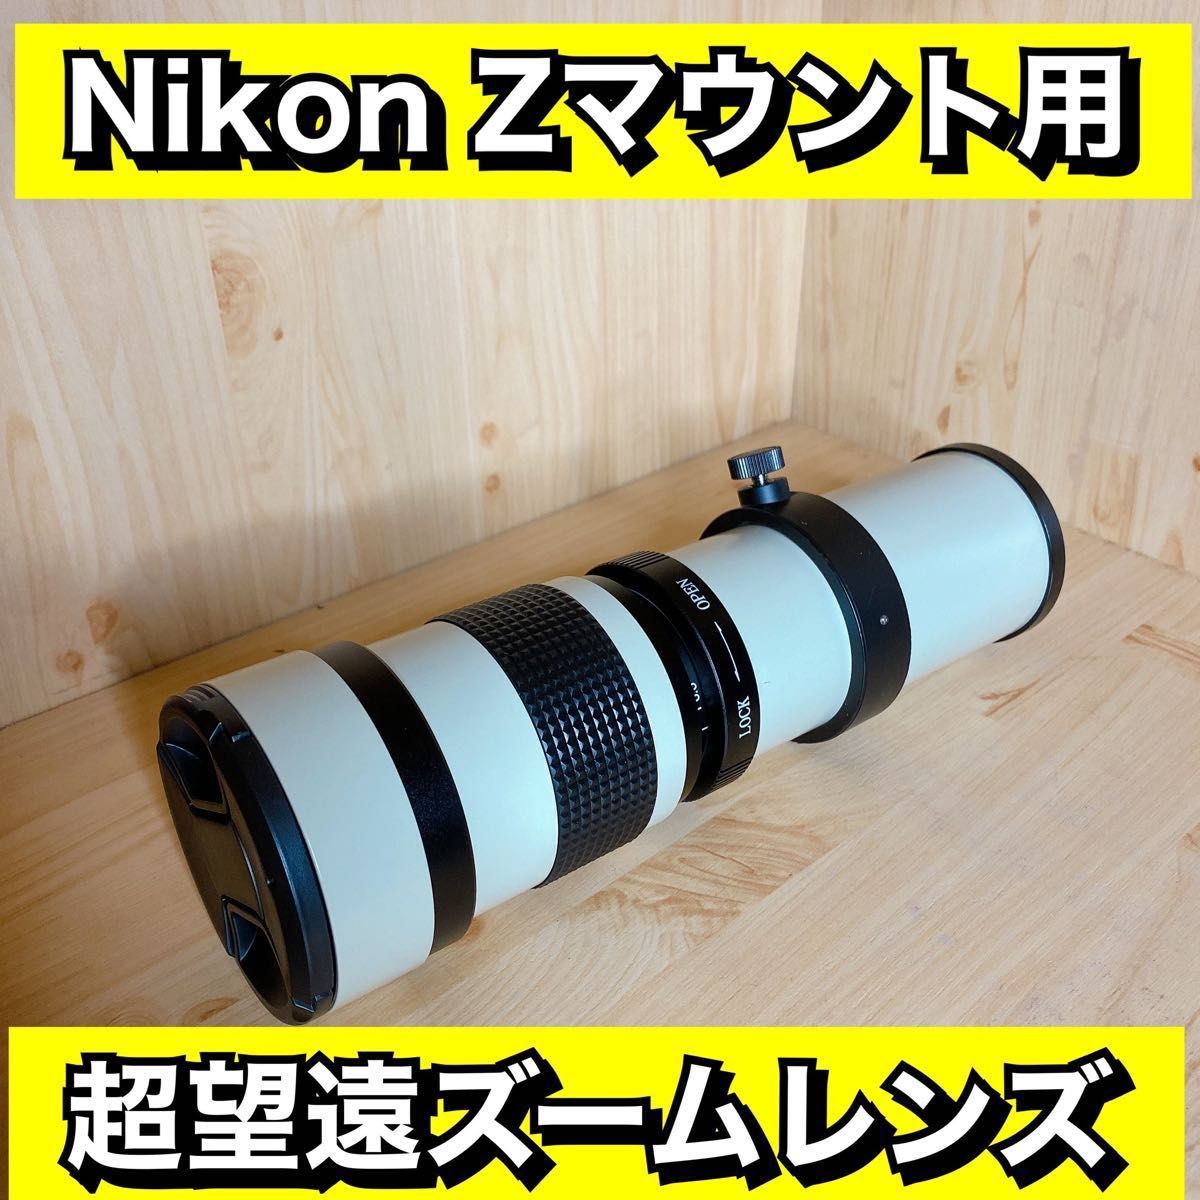 Nikon Zマウント対応 スーパーズームレンズ サードパーティ製 美品